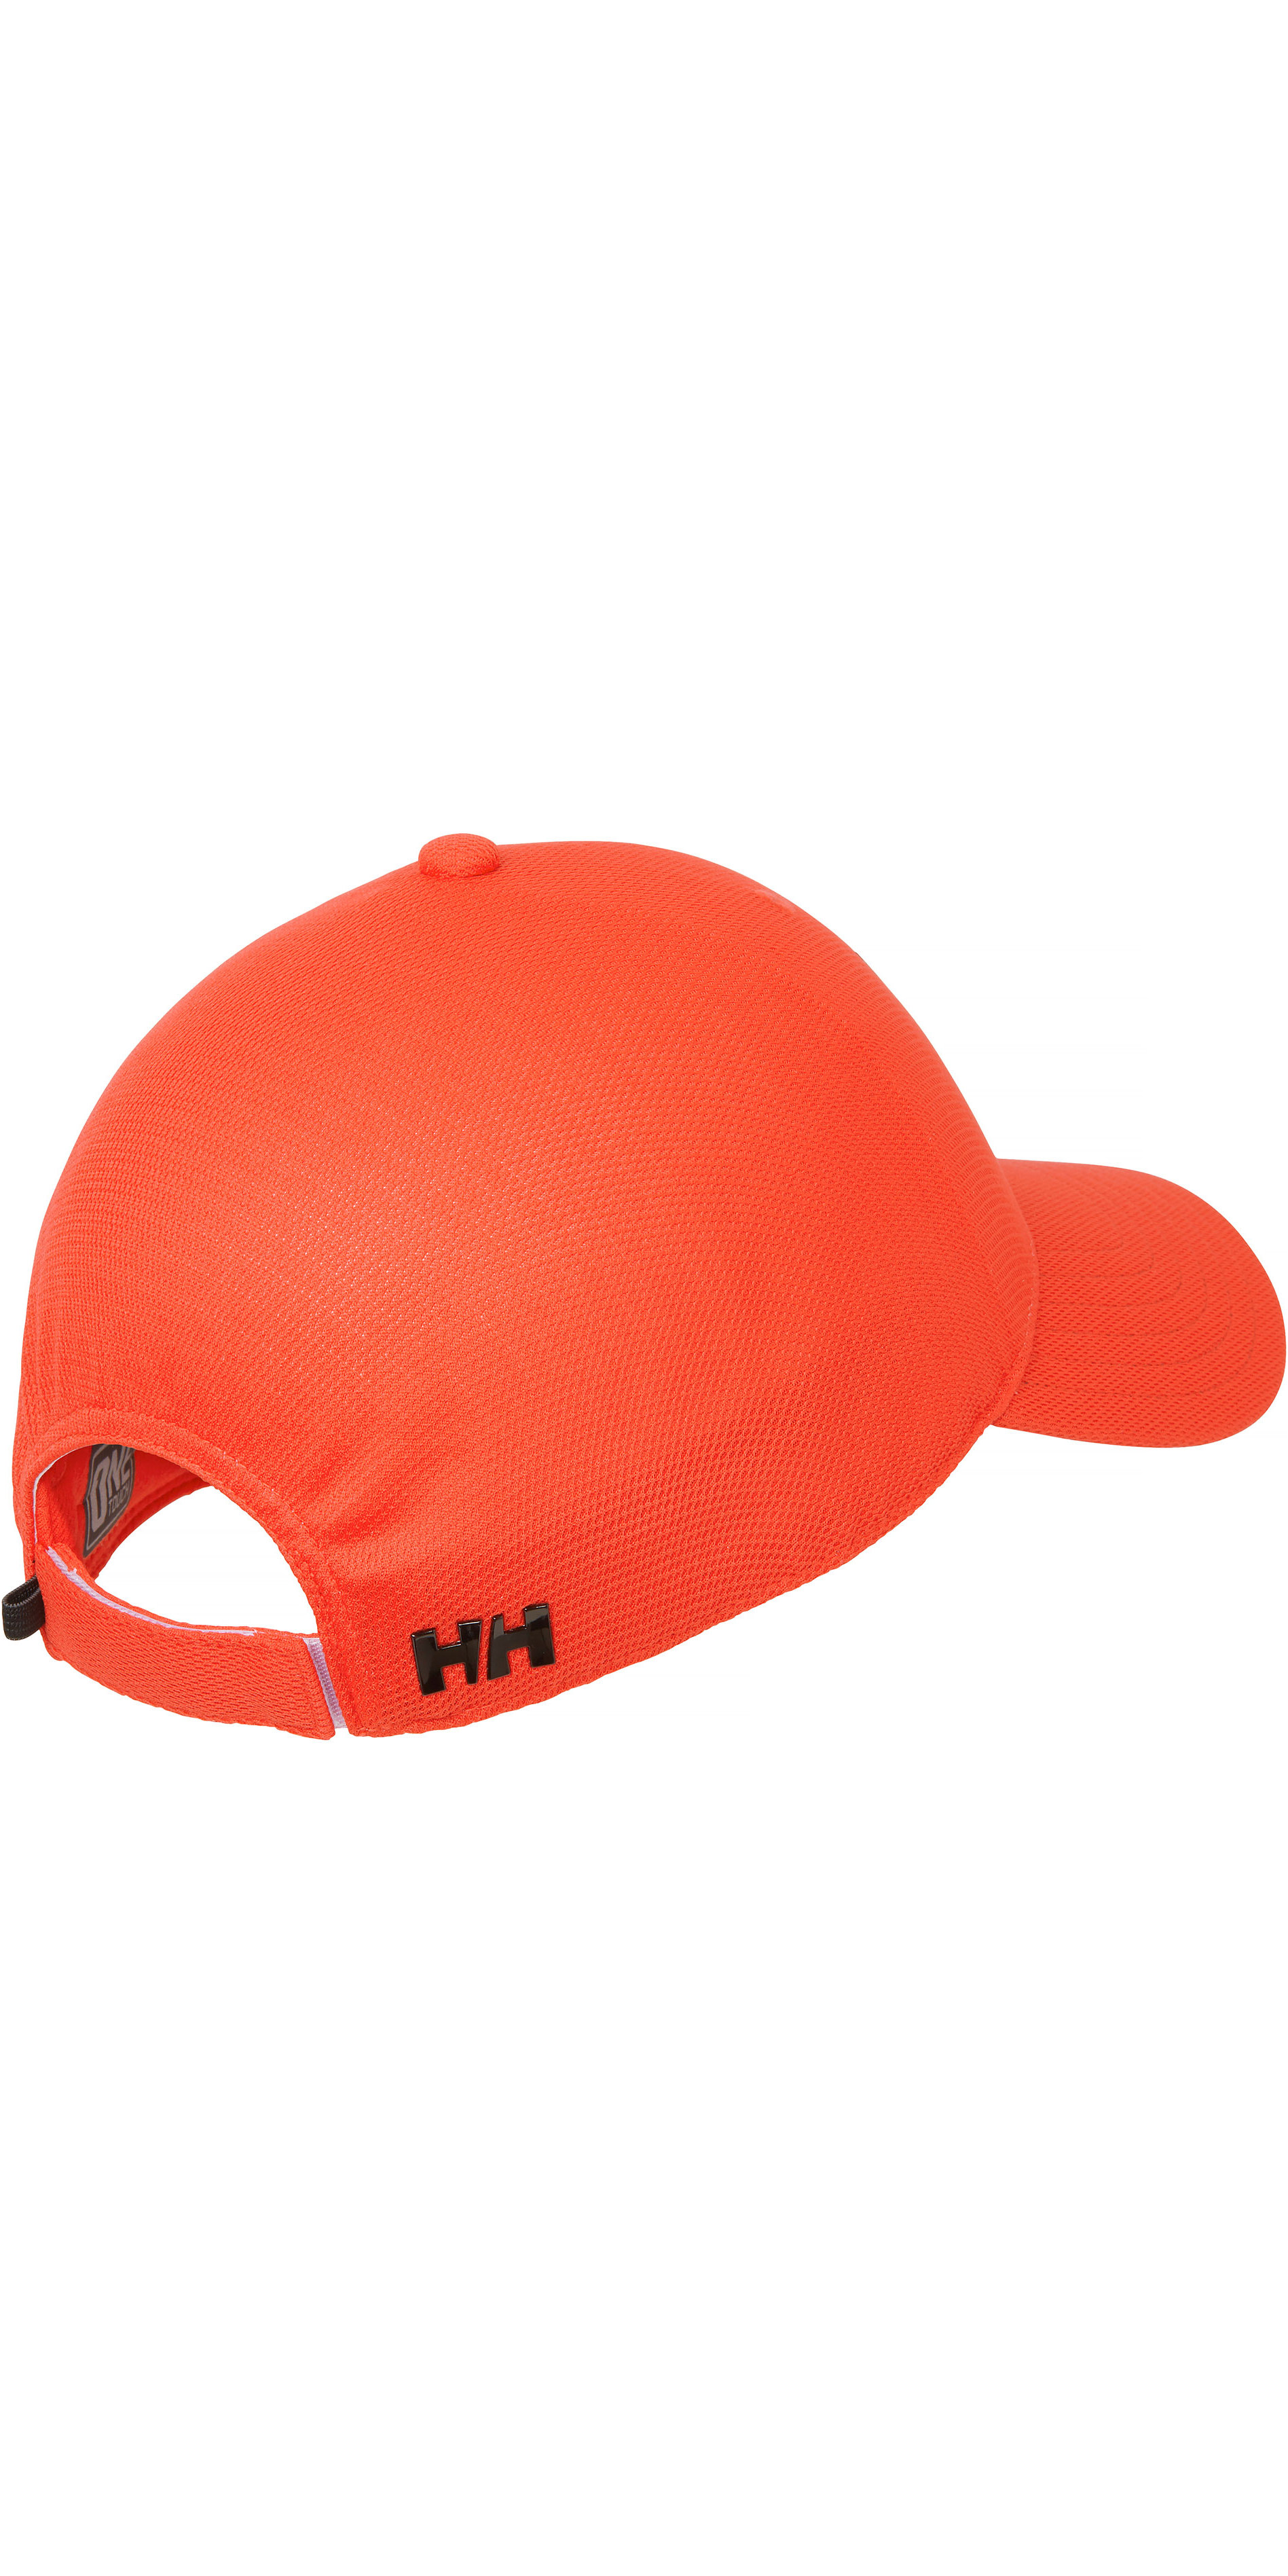 Rusland Pygmalion Dalset 2021 Helly Hansen HP Foil Cap Blaze Orange 67397 - Sailing - Accessories -  Gloves | Watersports Outlet